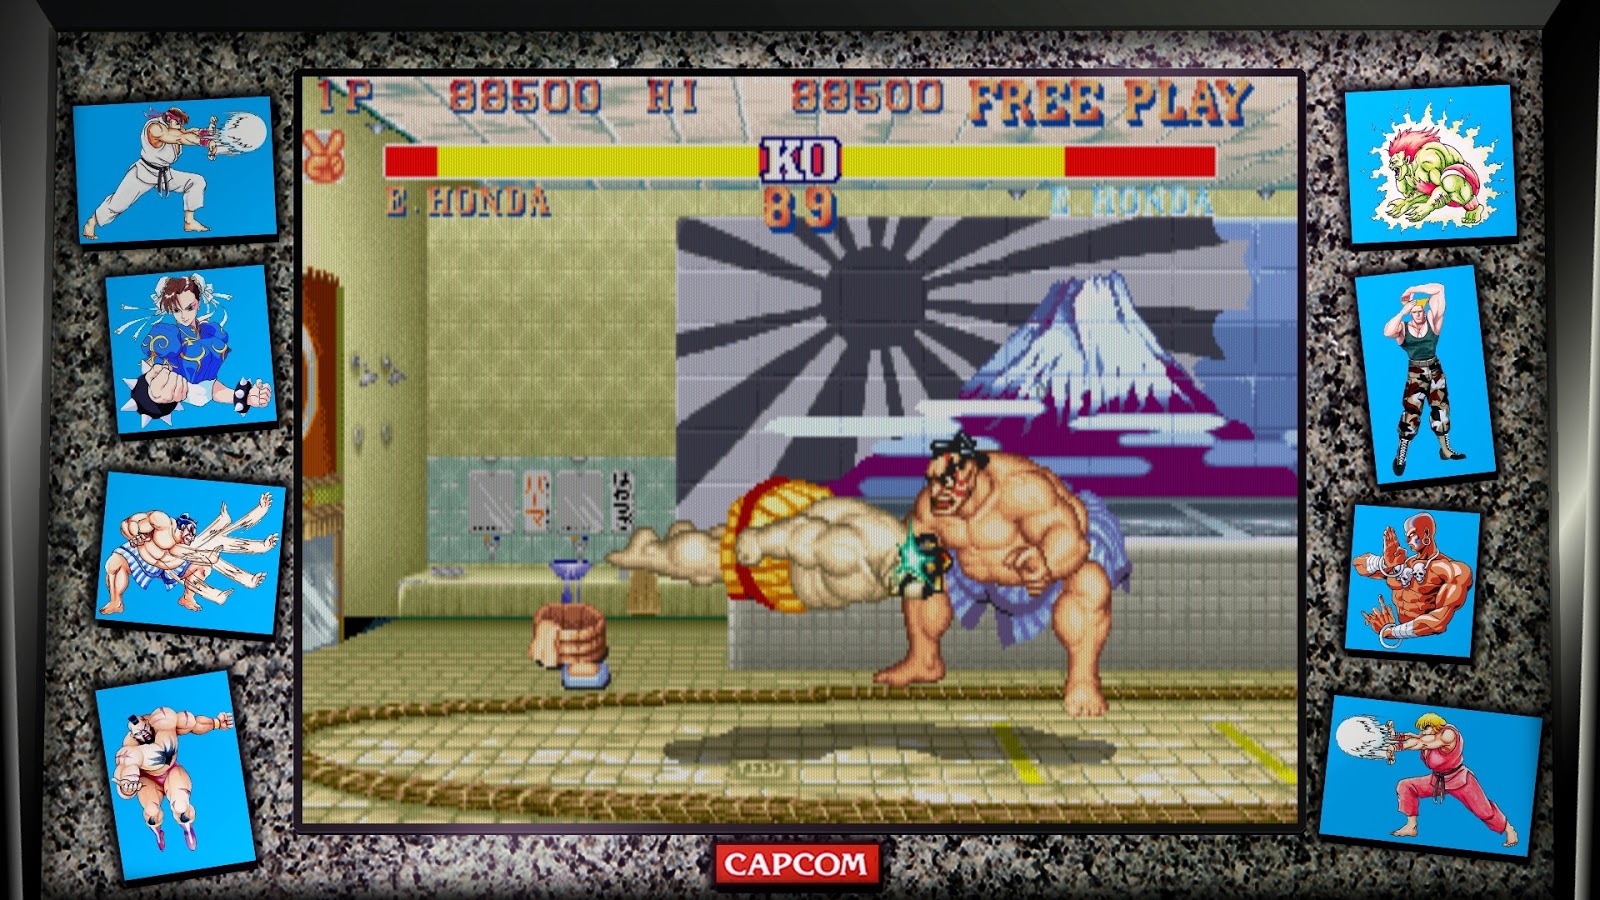 Análise: Street Fighter 30th Anniversary Collection (Multi) relembra os  bons tempos dos fliperamas - GameBlast